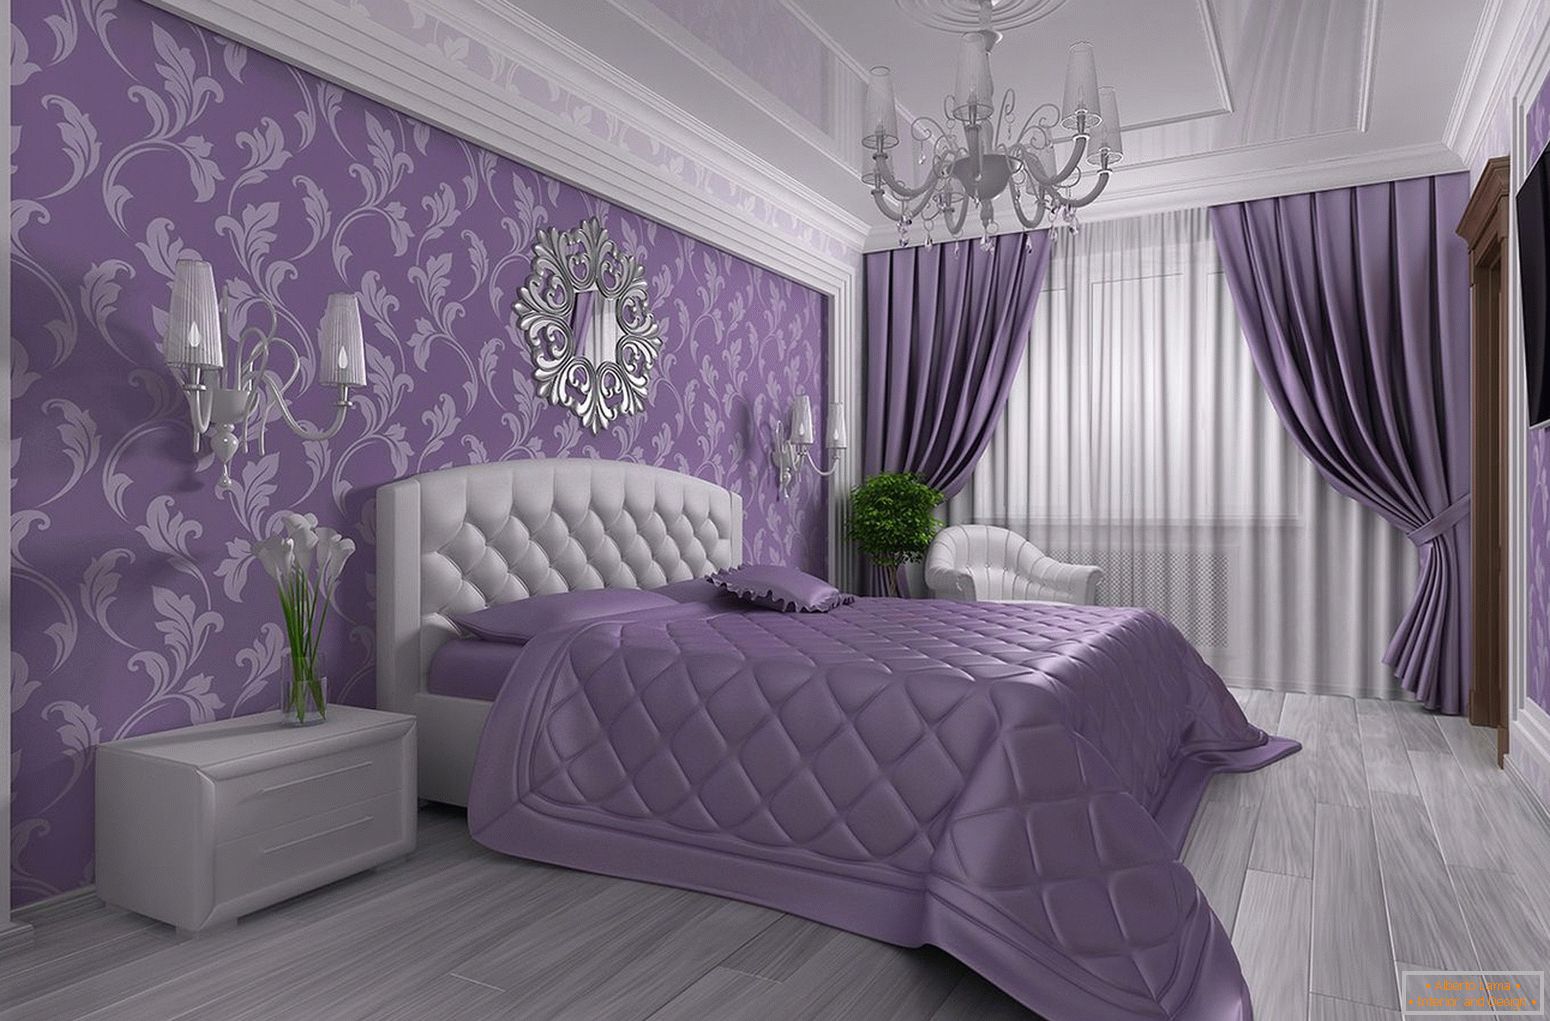 Colcha lilás na cama